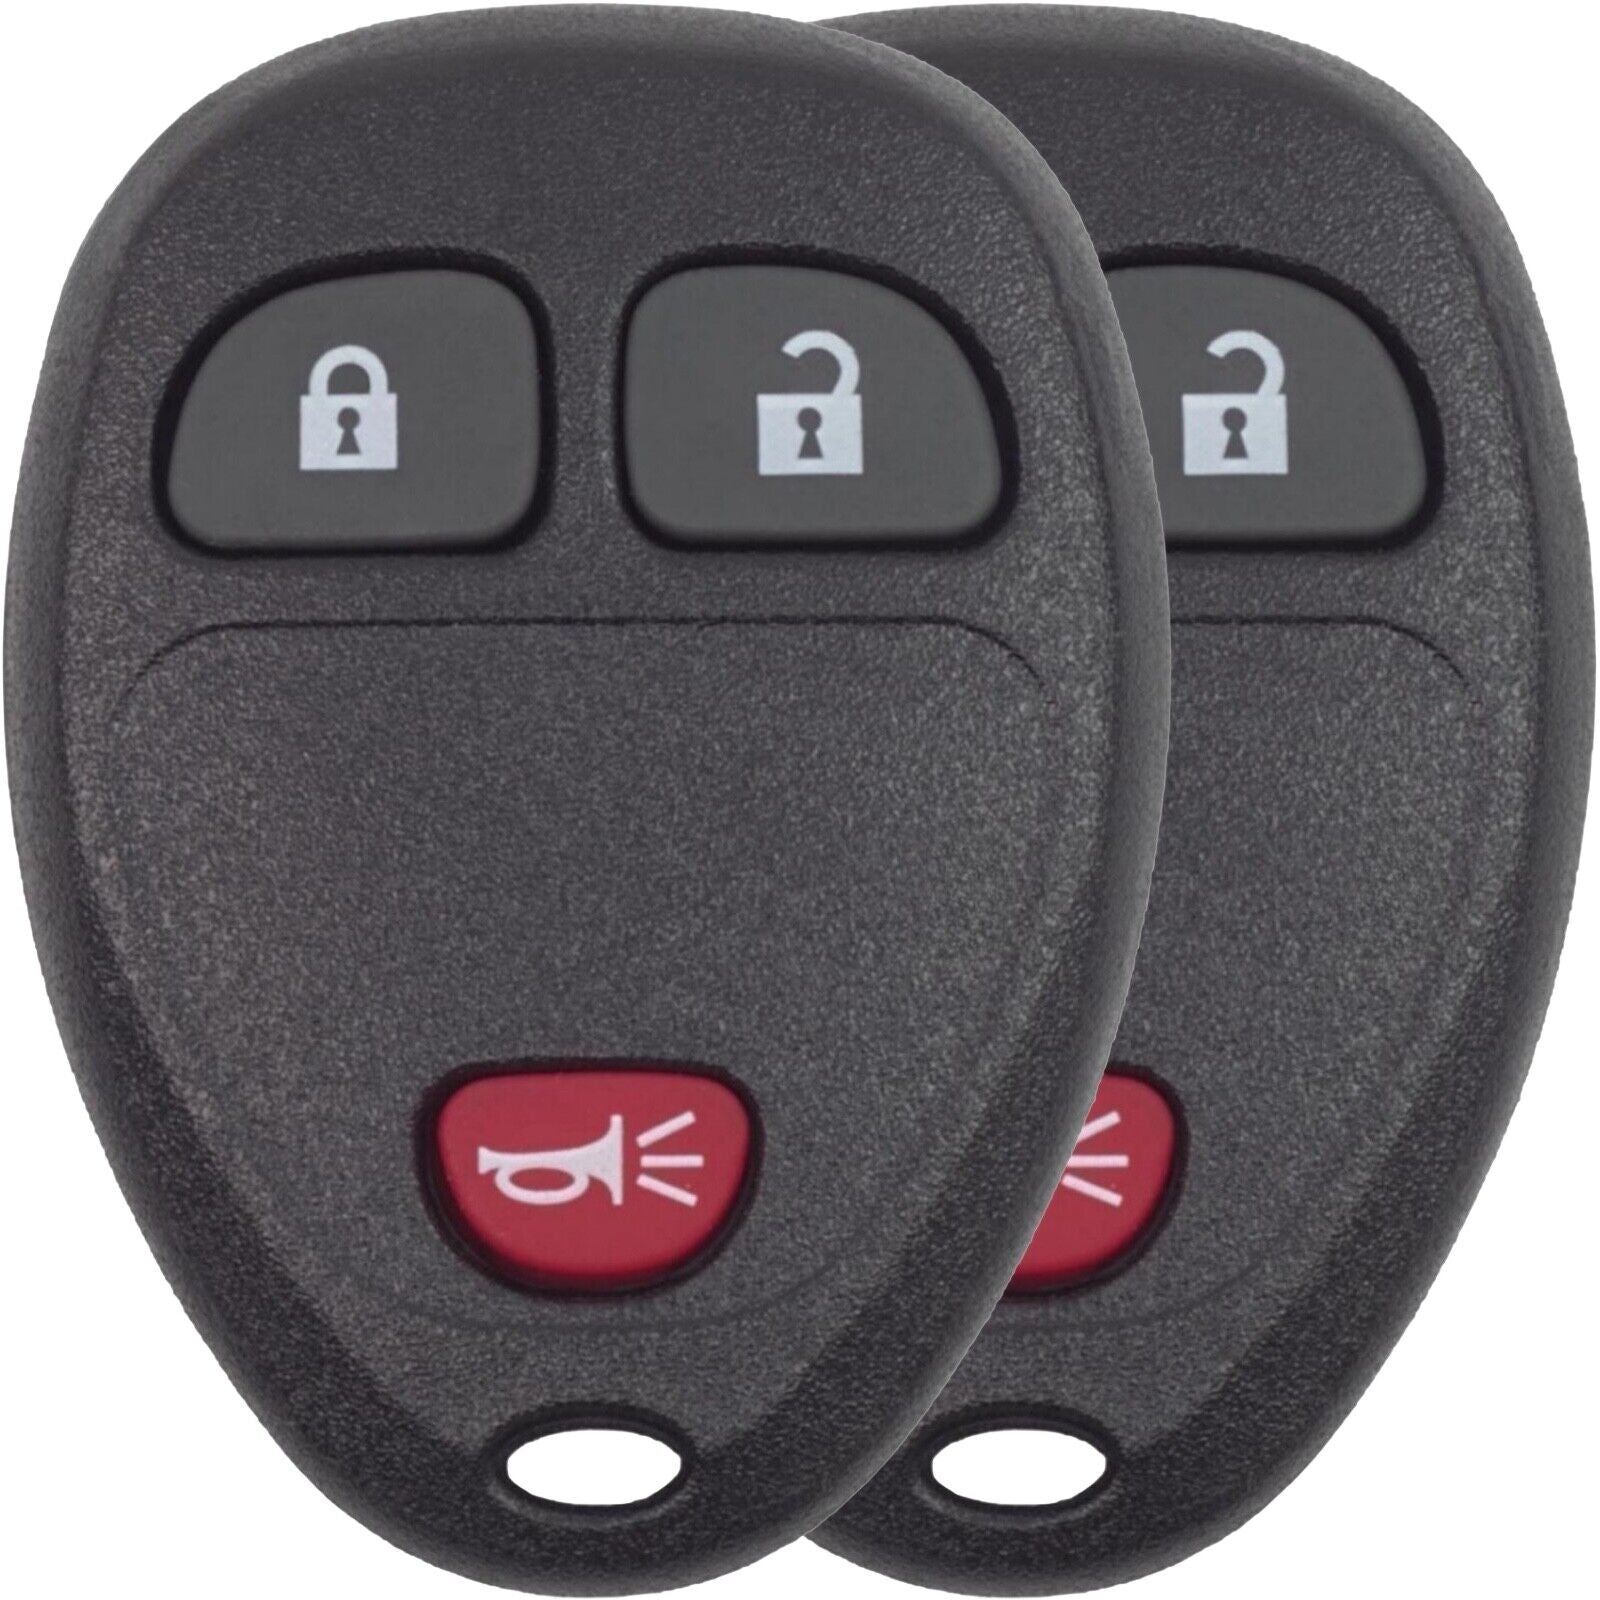 Key Fob Replacement For Chevy Buick Pontiac Saturn FCC ID: KOBGT04A